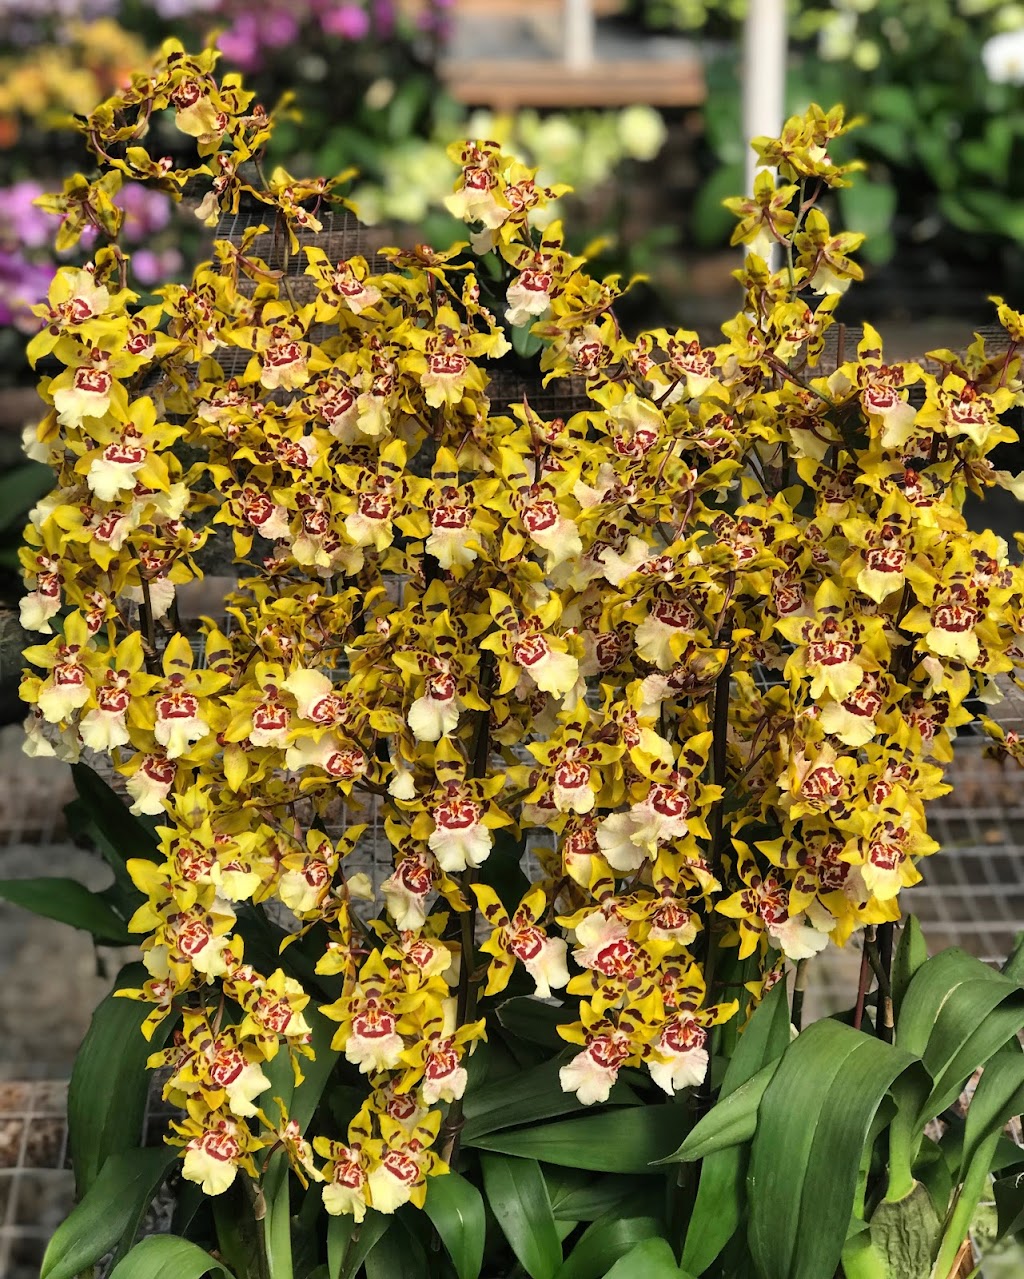 Taida Orchids Inc | 459 Foothill Rd, Bridgewater, NJ 08807 | Phone: (908) 595-0055